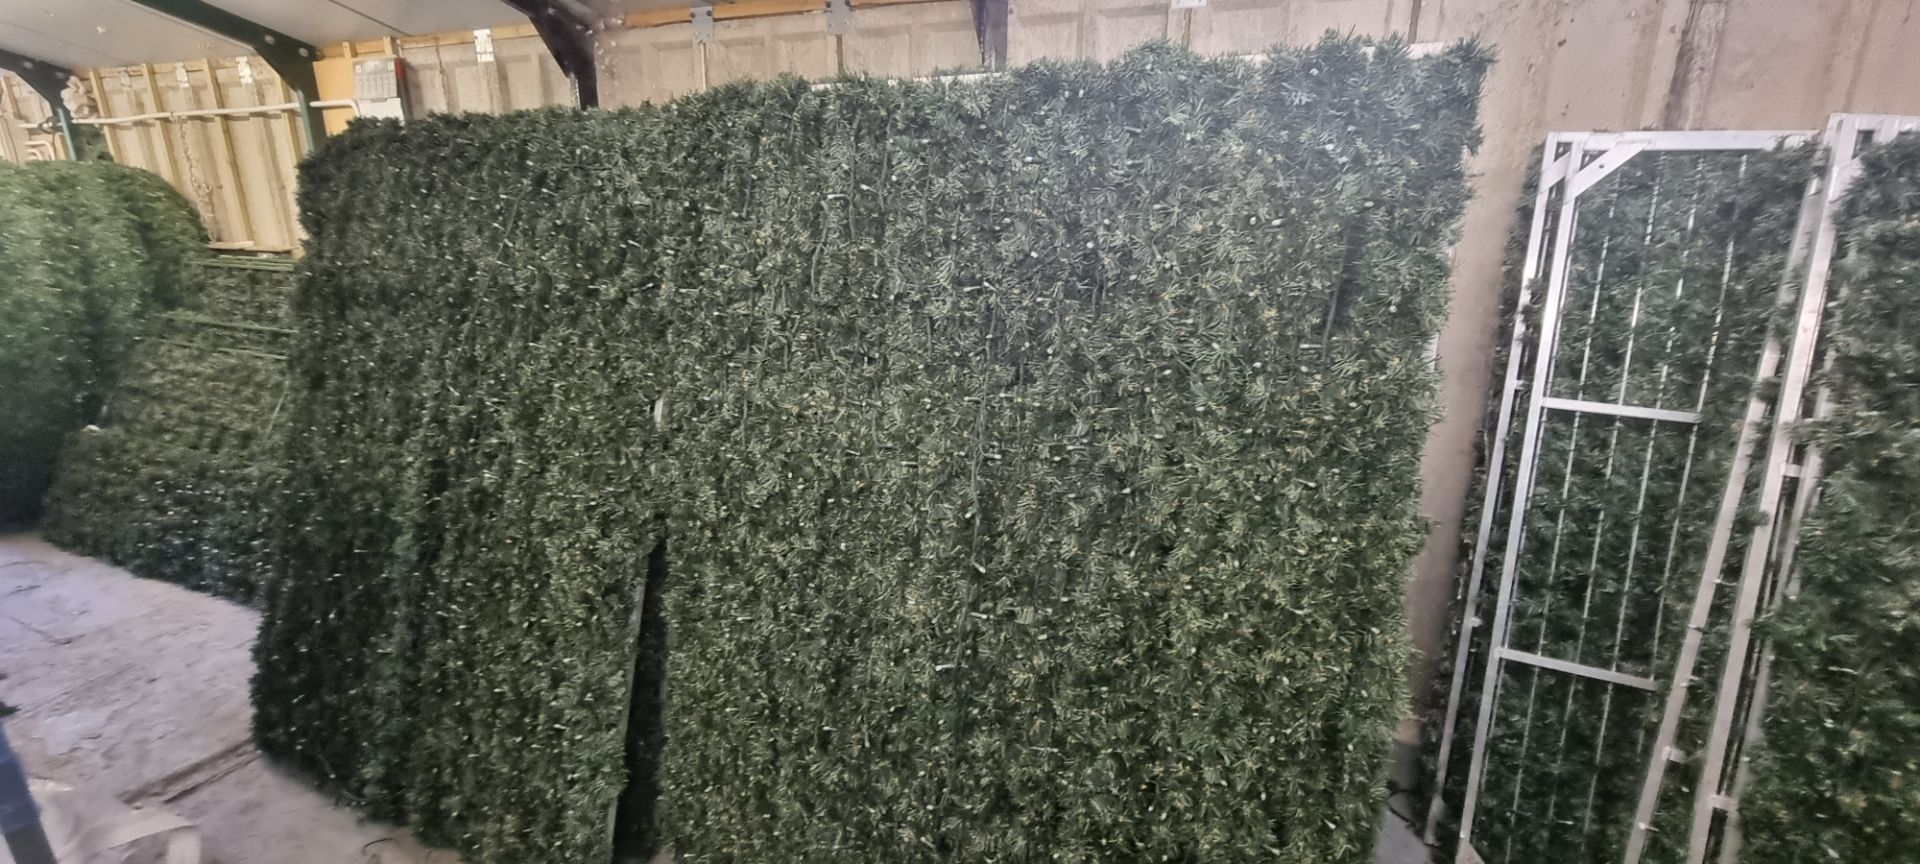 2 x Seasonal Aluminium Panels with Green Garland - Image 2 of 2